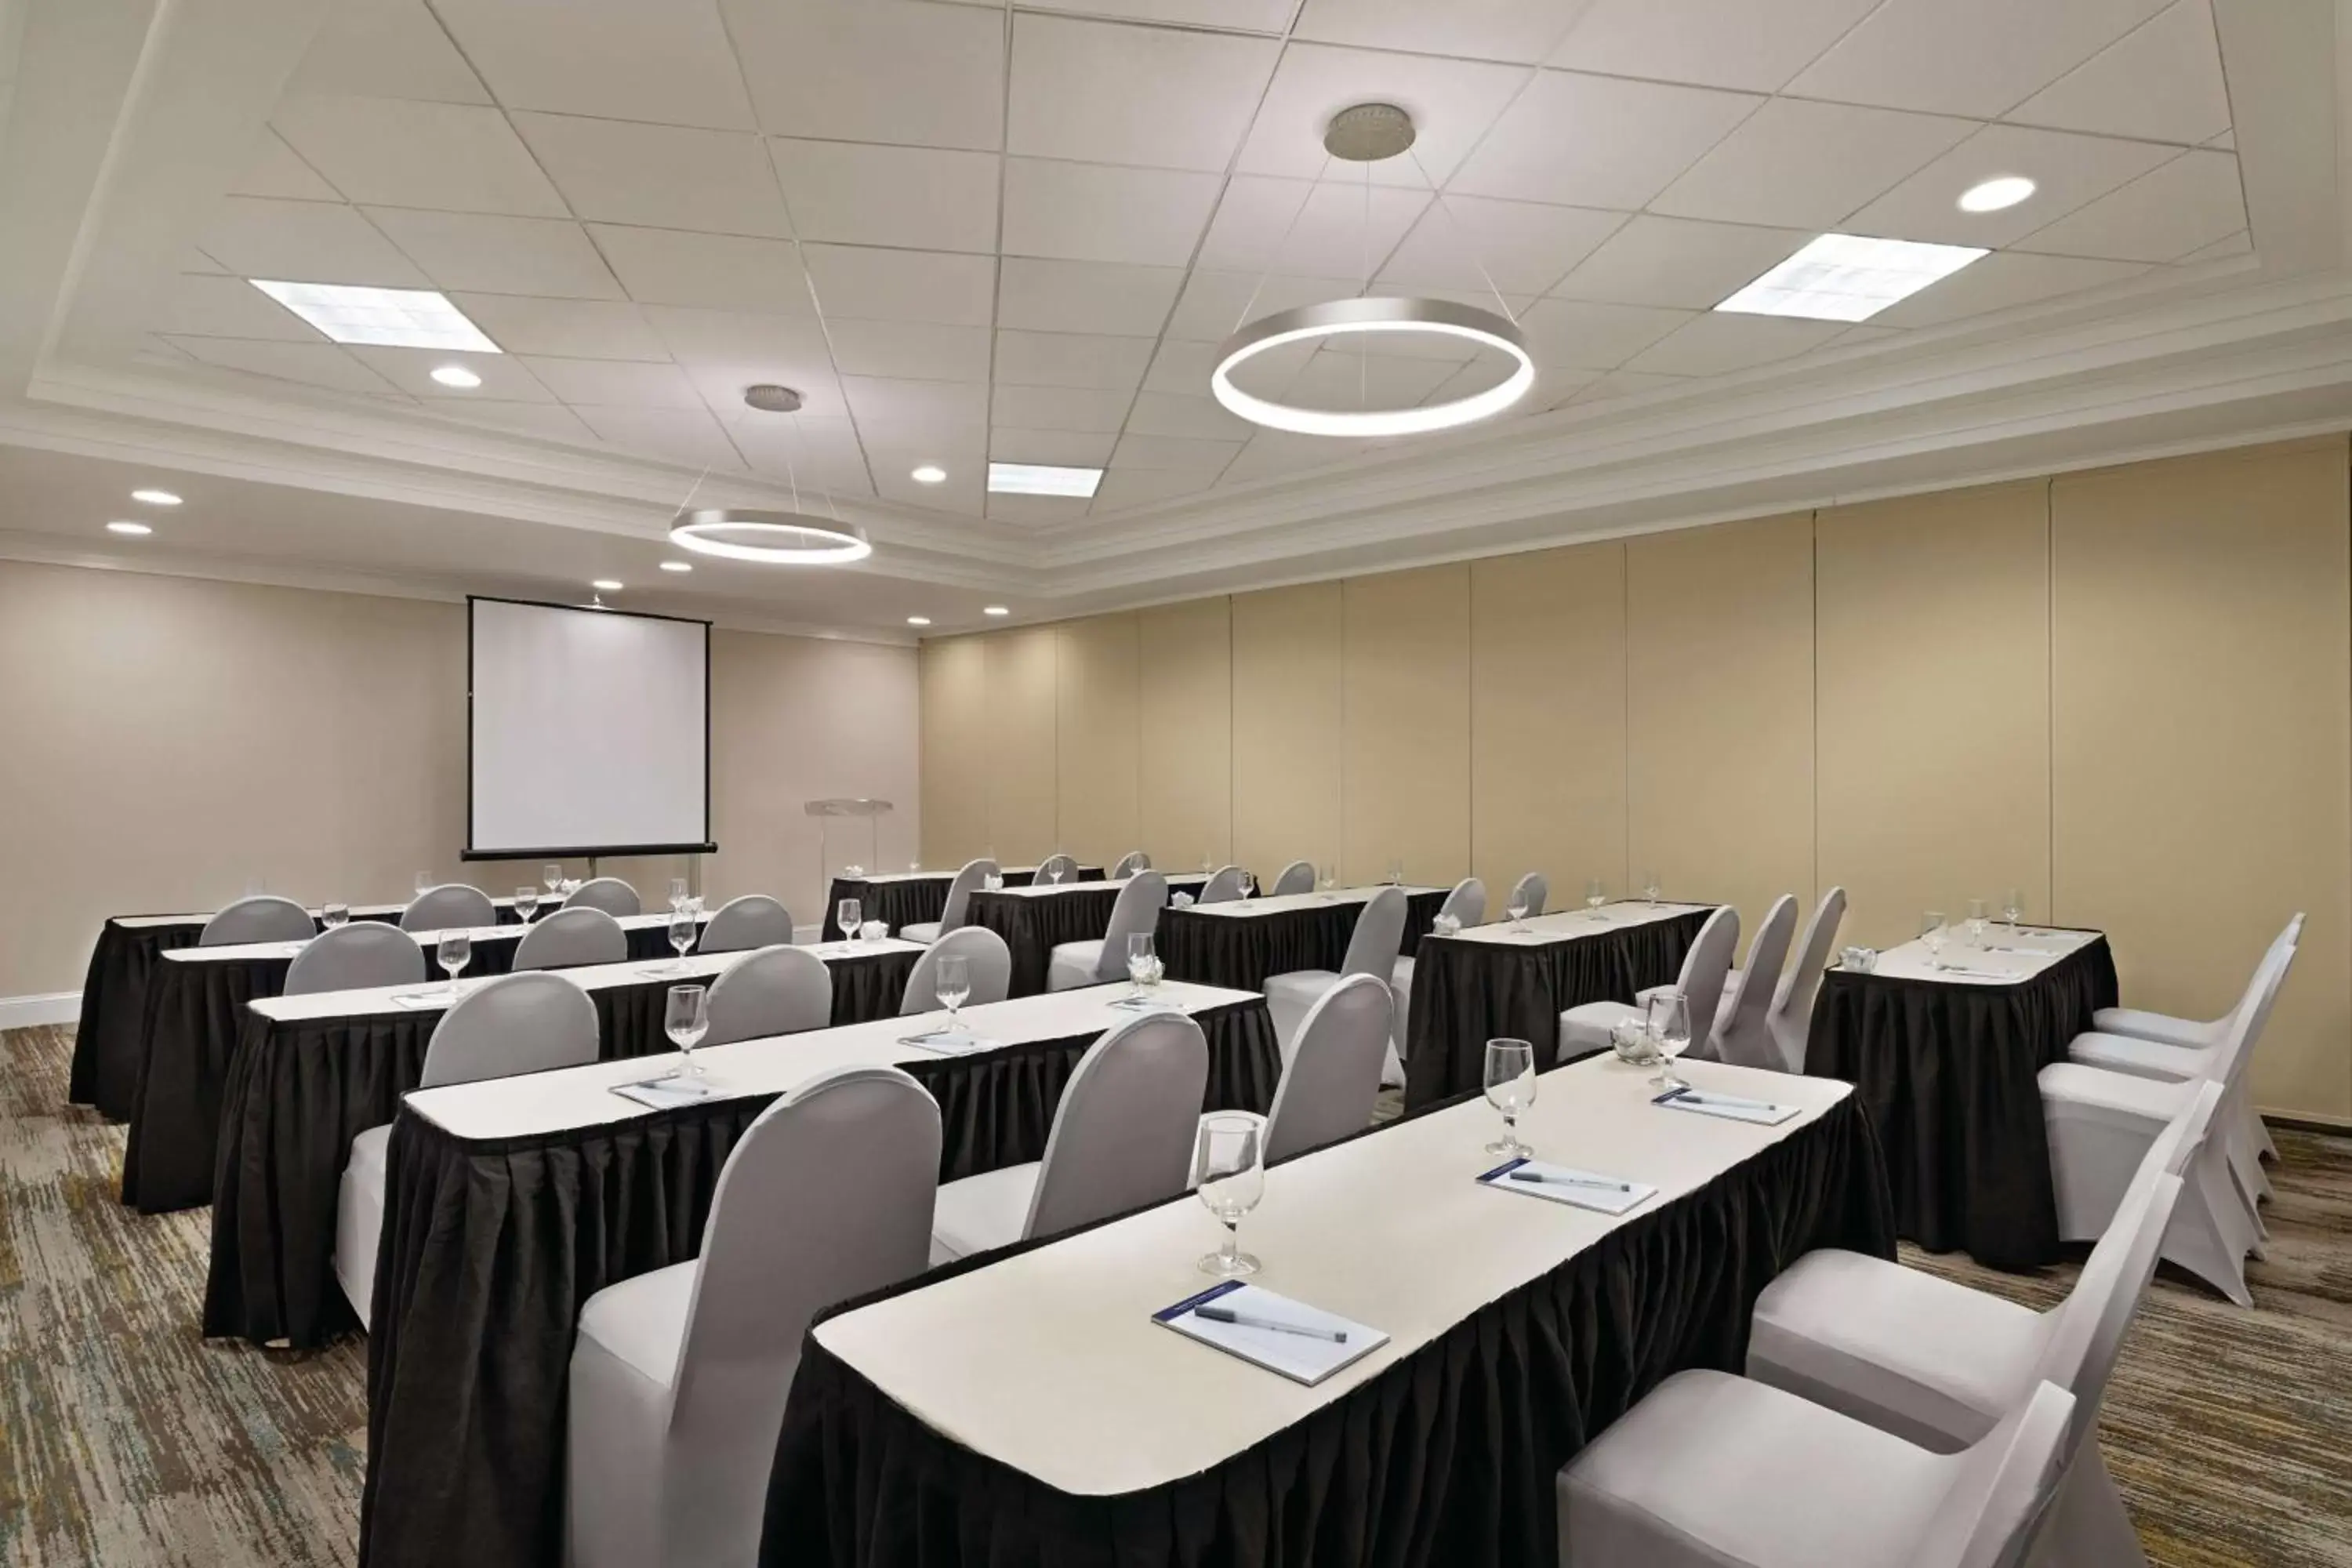 Meeting/conference room in Hilton Garden Inn Oxford/Anniston, AL